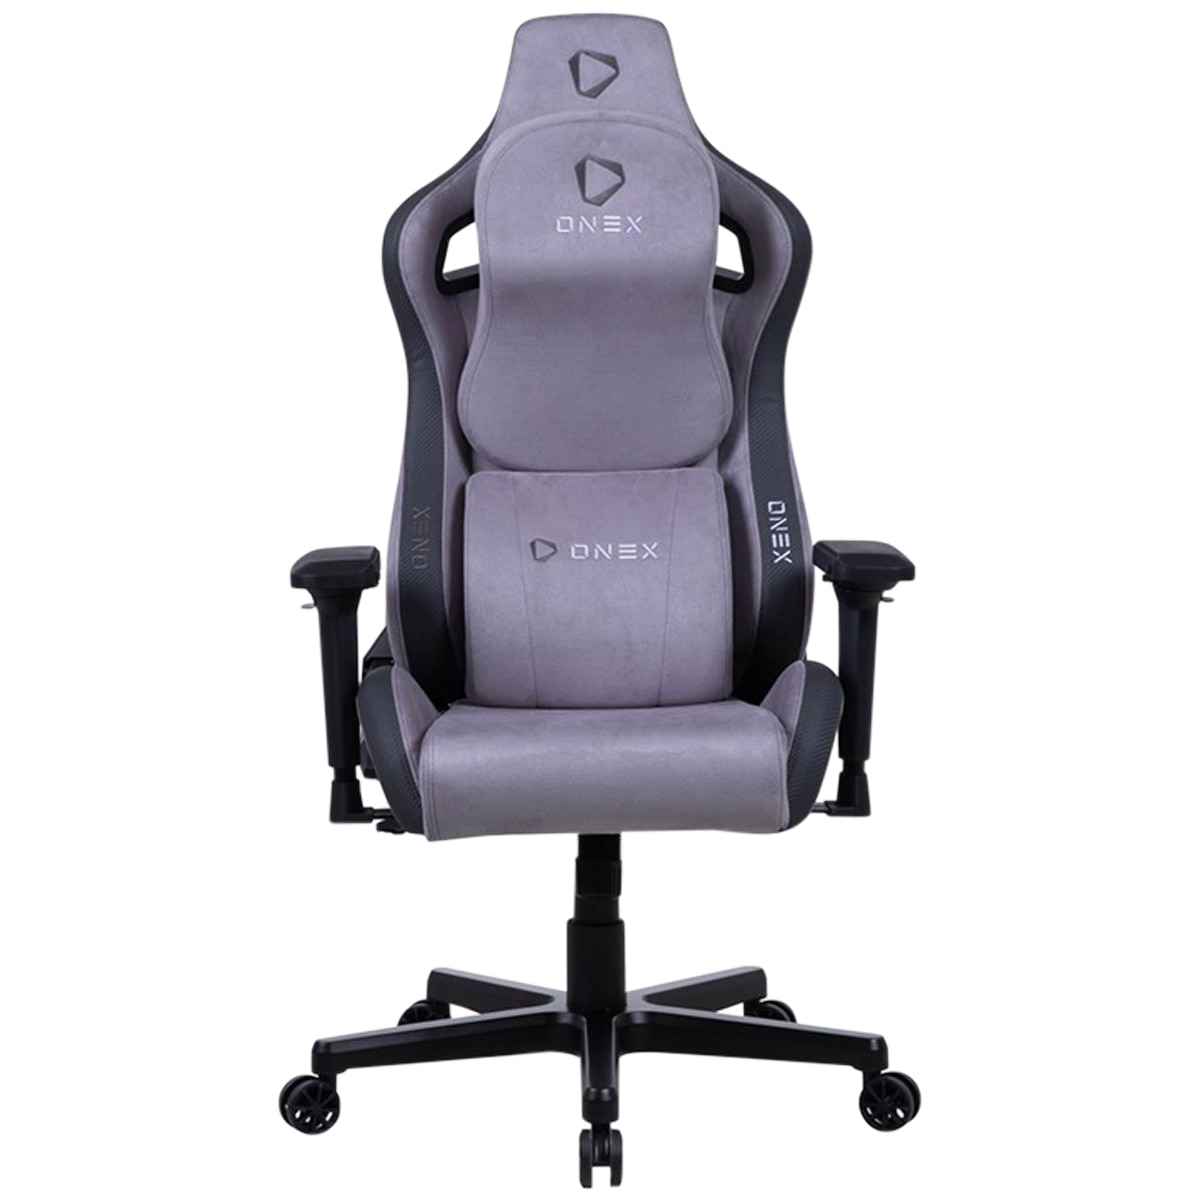 Onex Ev10 Evolution Edition Gaming Chair Suede Grey Costco Australia